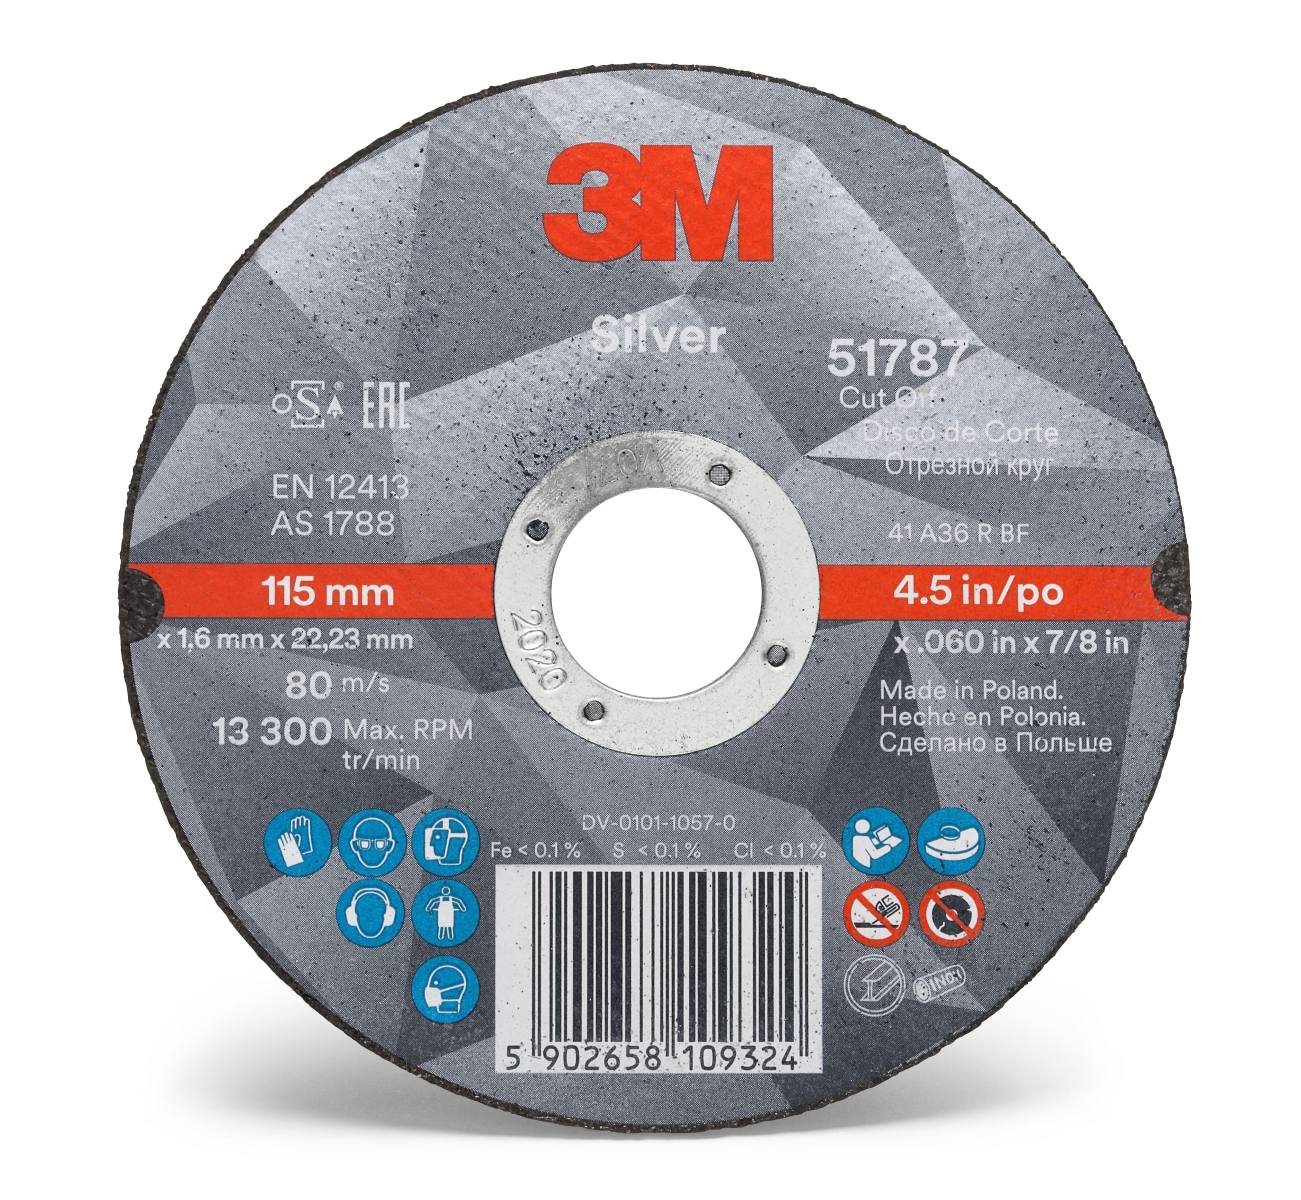 Disco de corte 3M Silver Cut-Off, 150 mm, 1,6 mm, 22,23 mm, T41, 51814